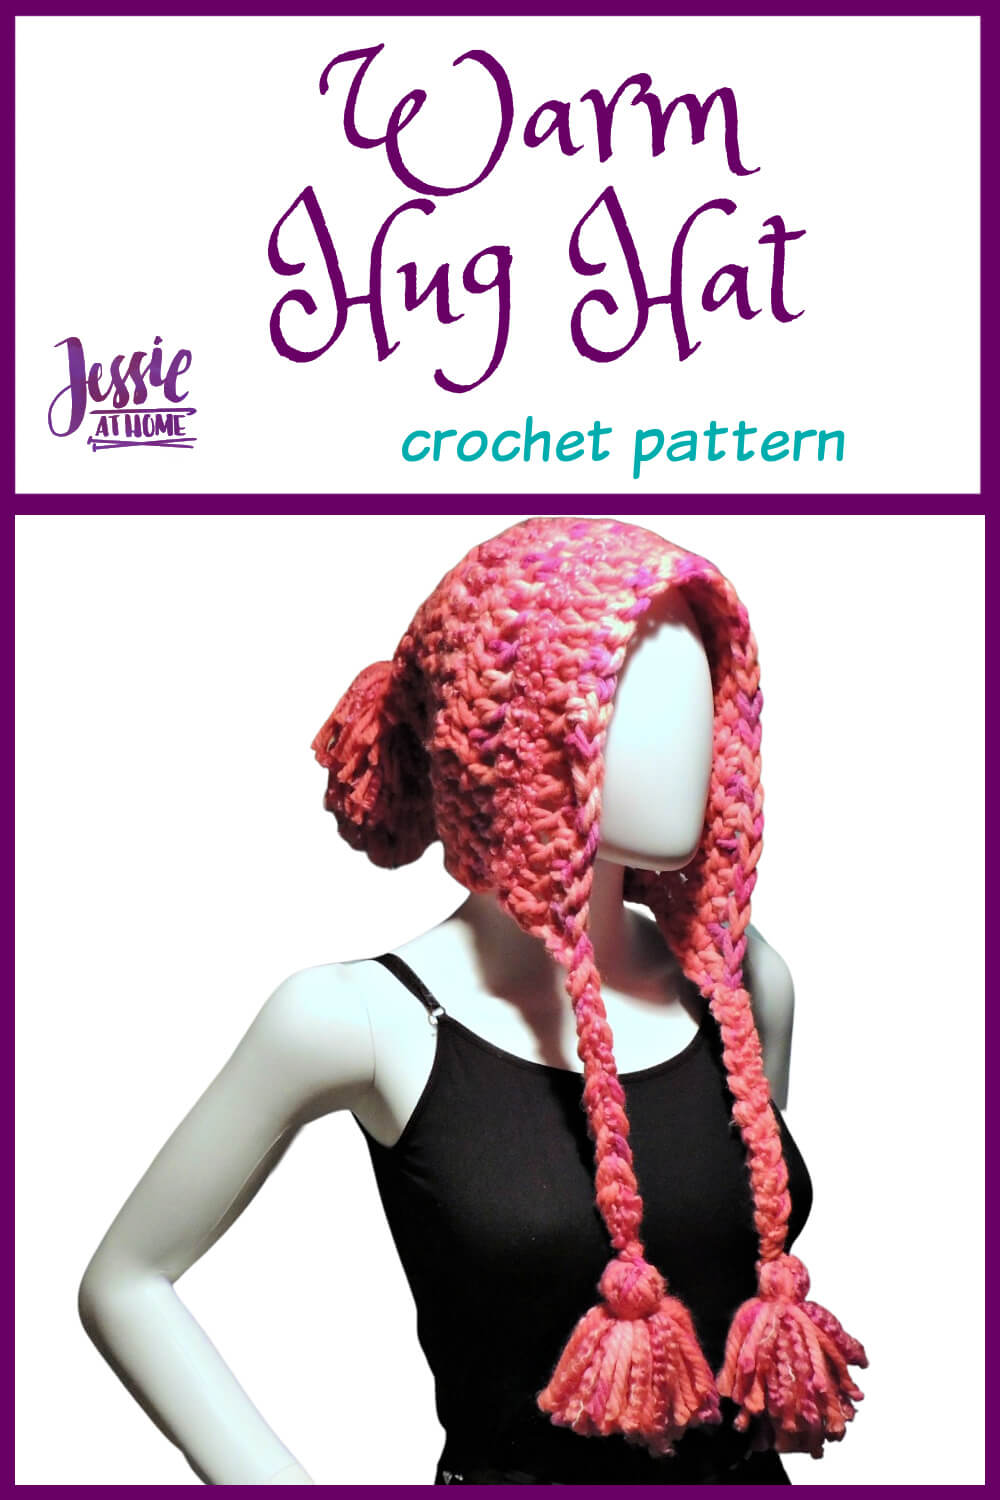 Warm Hug Hat crochet pattern by Jessie At Home - Pin 1